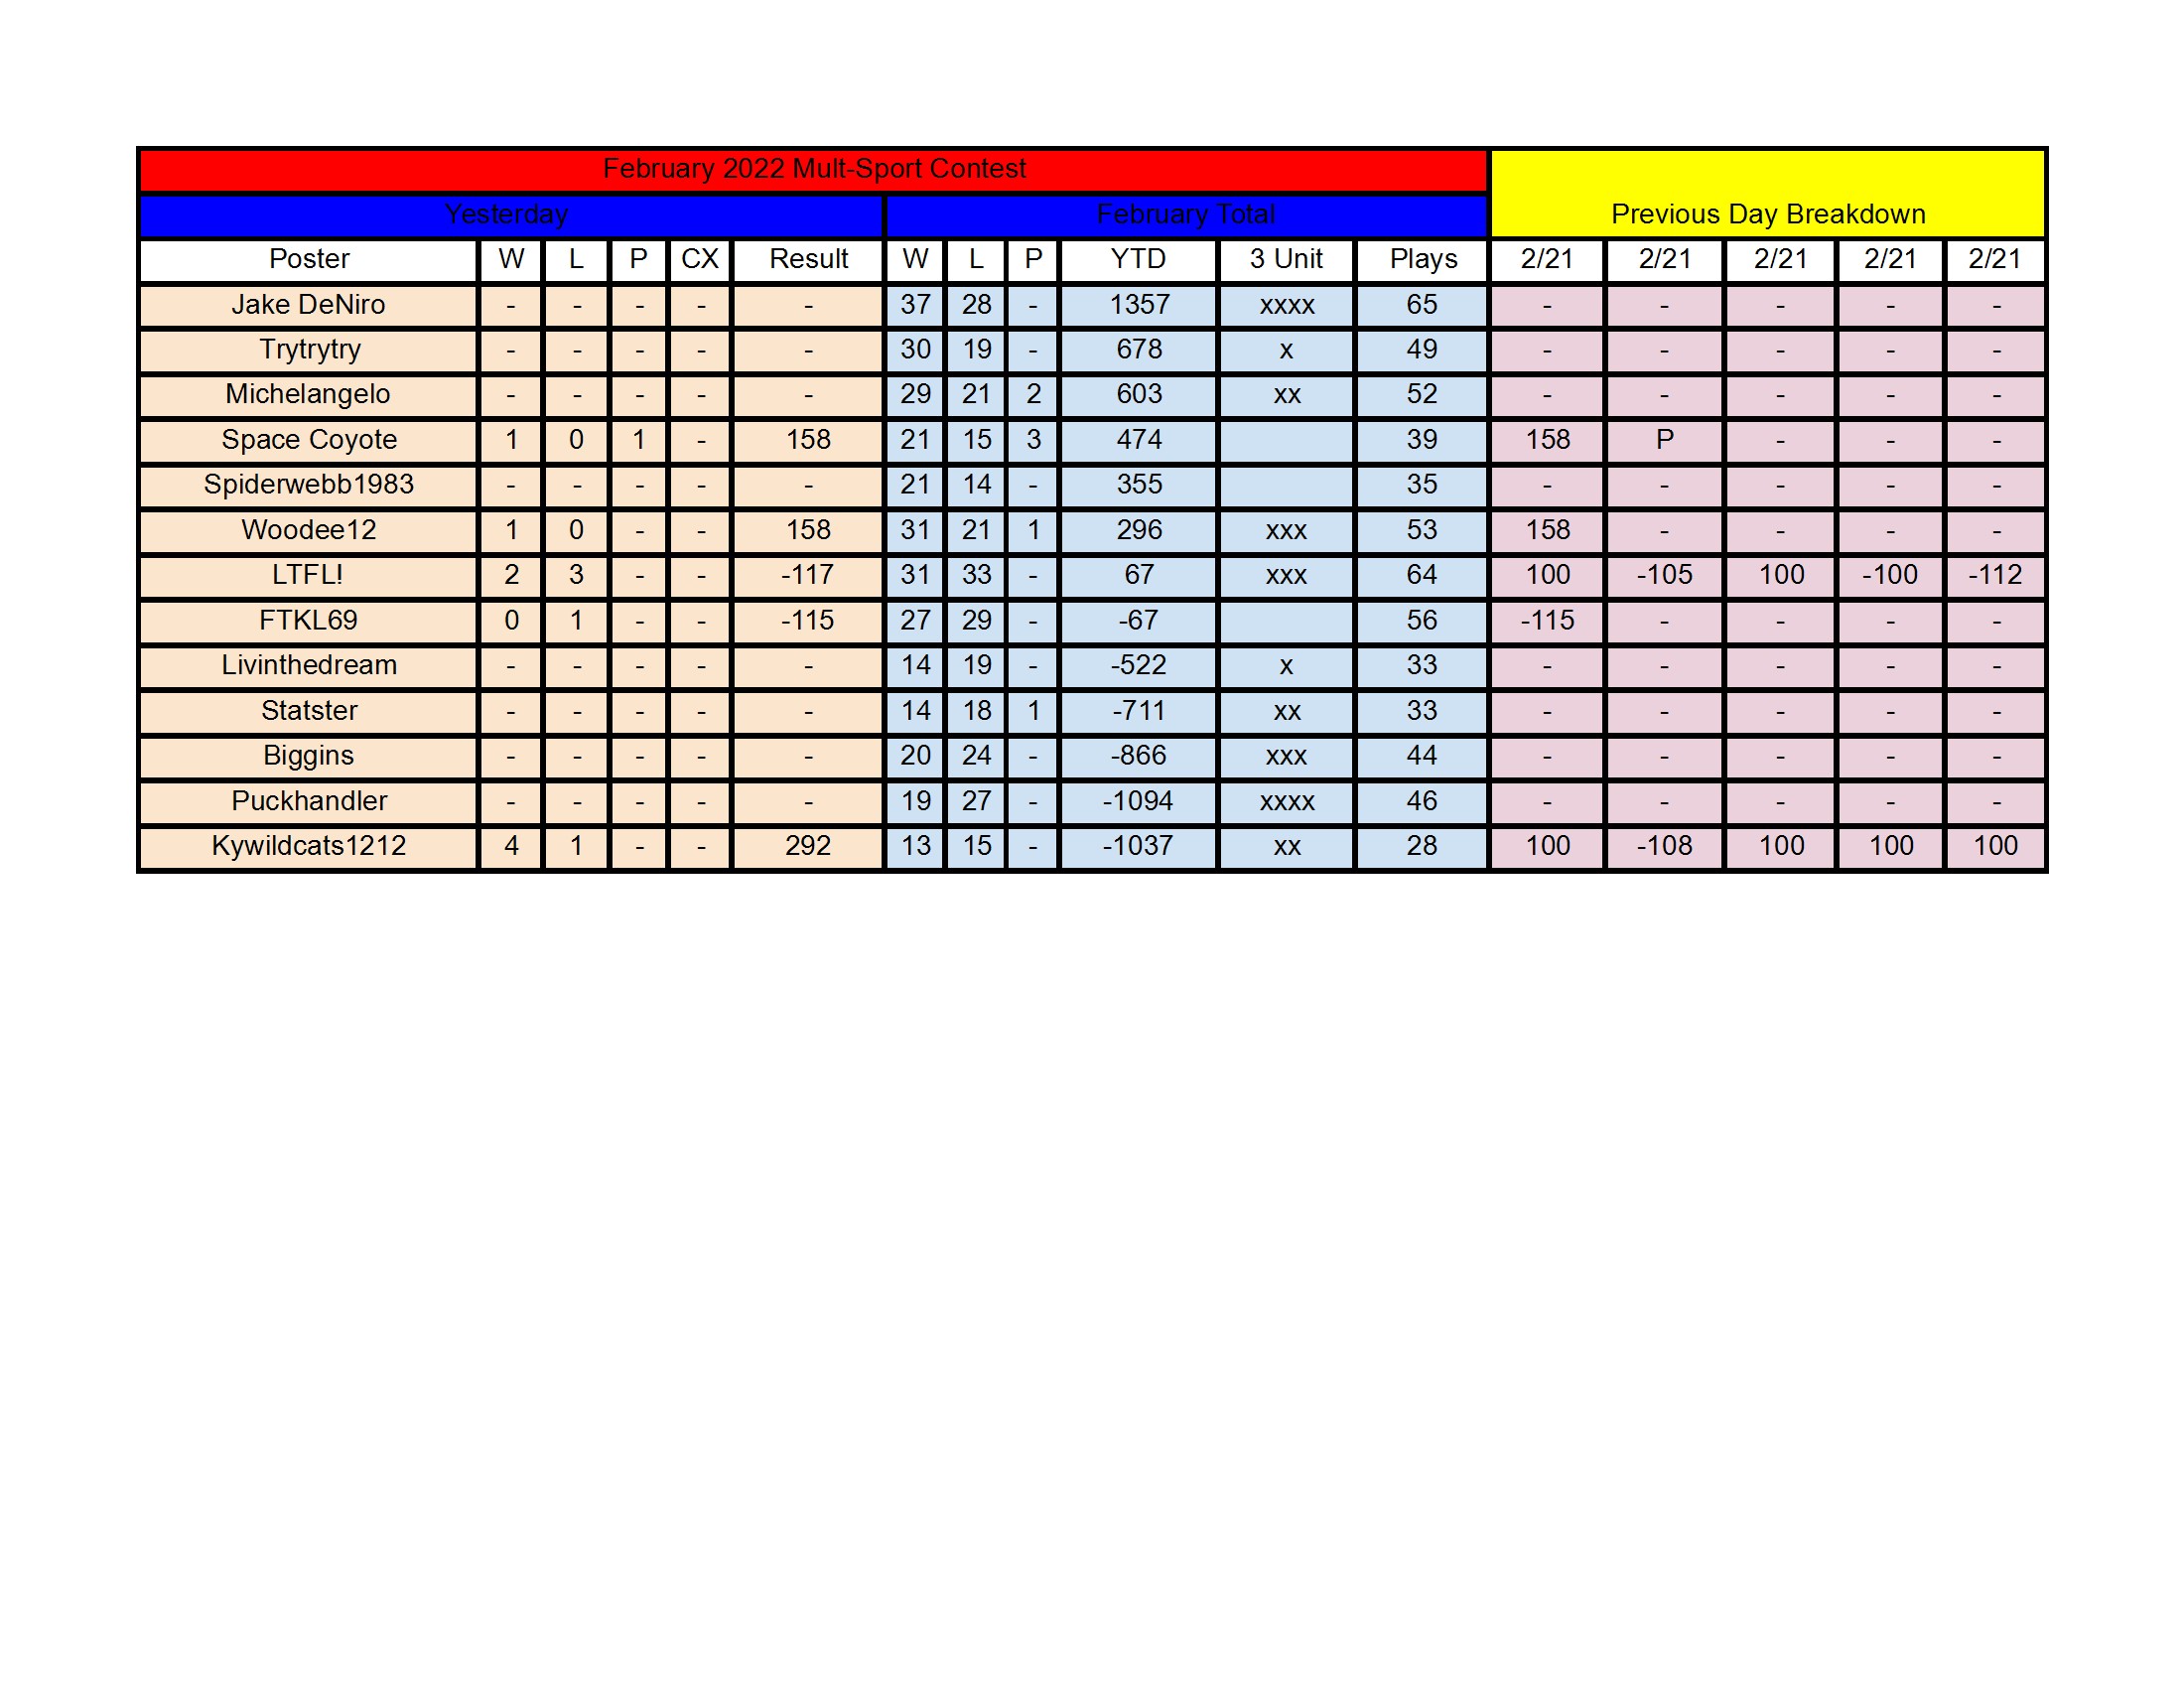 February Standings - 2_21 conv 1.jpeg